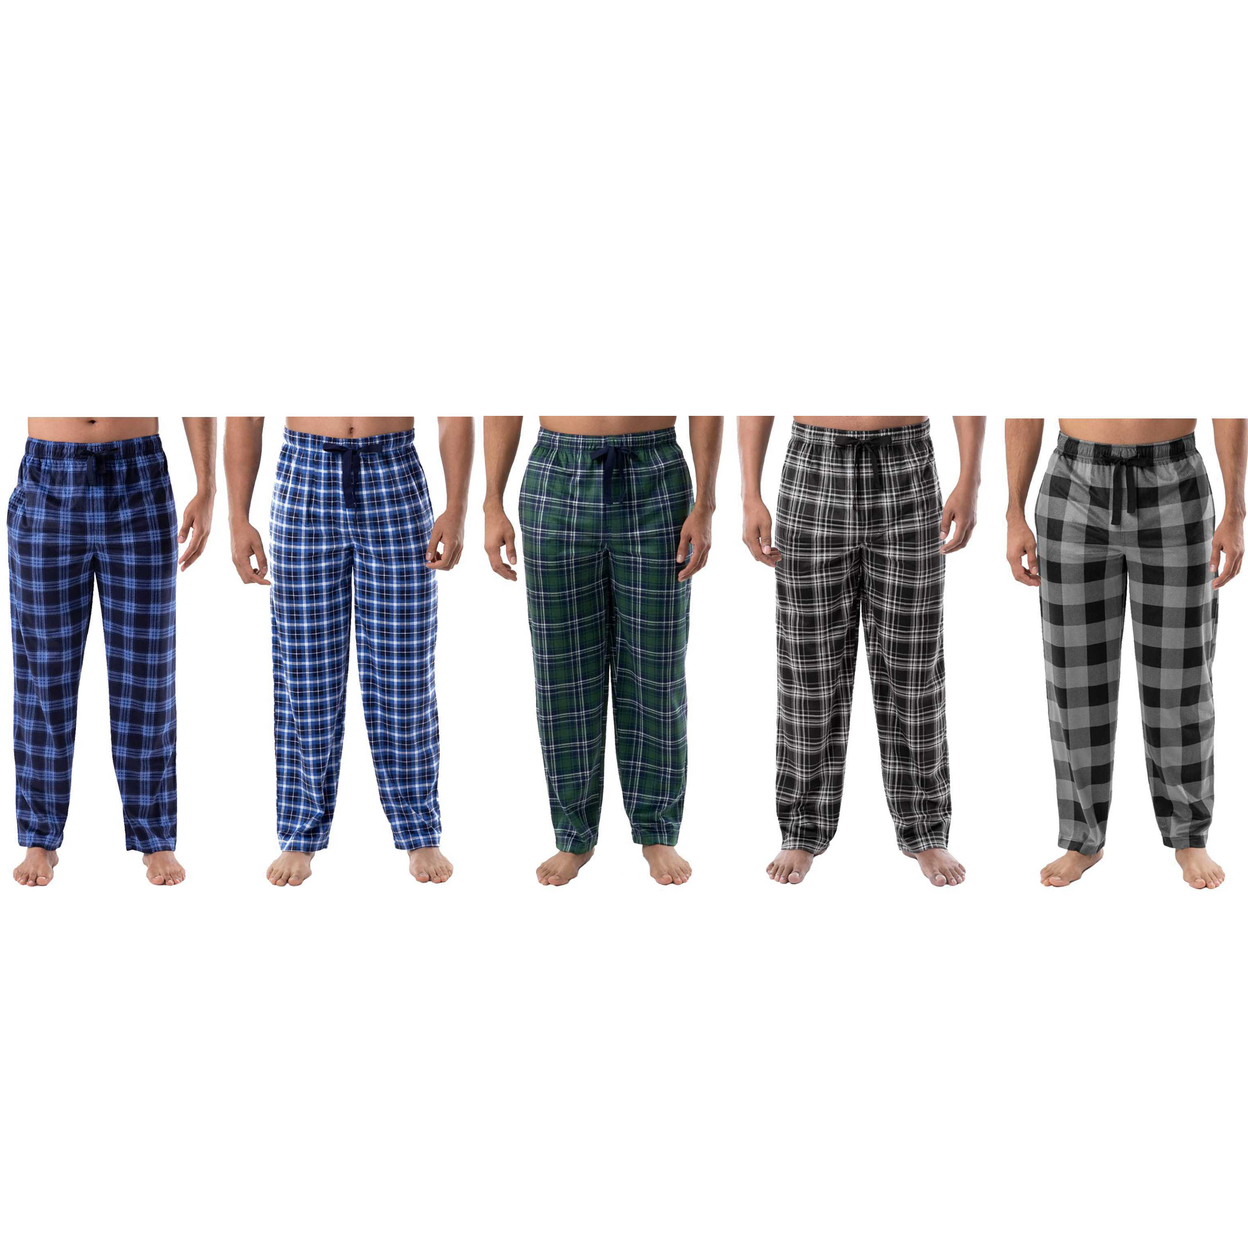 5-Pack: Men's Ultra-Soft Cozy Lounge Sleep Micro Fleece Plaid Pajama Pants - X-large